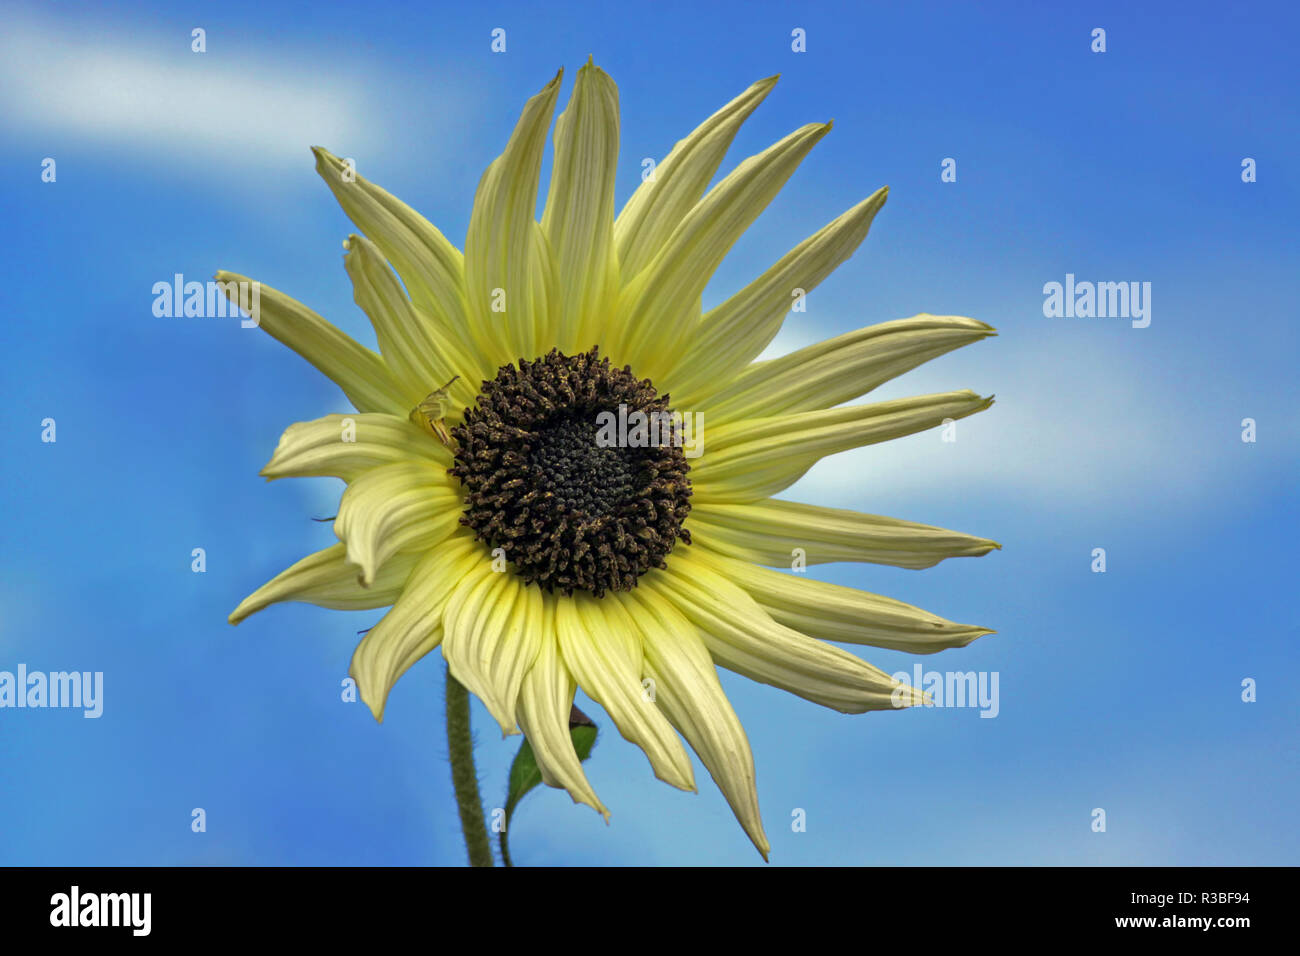 sunflower helianthus debilis against blue sky Stock Photo